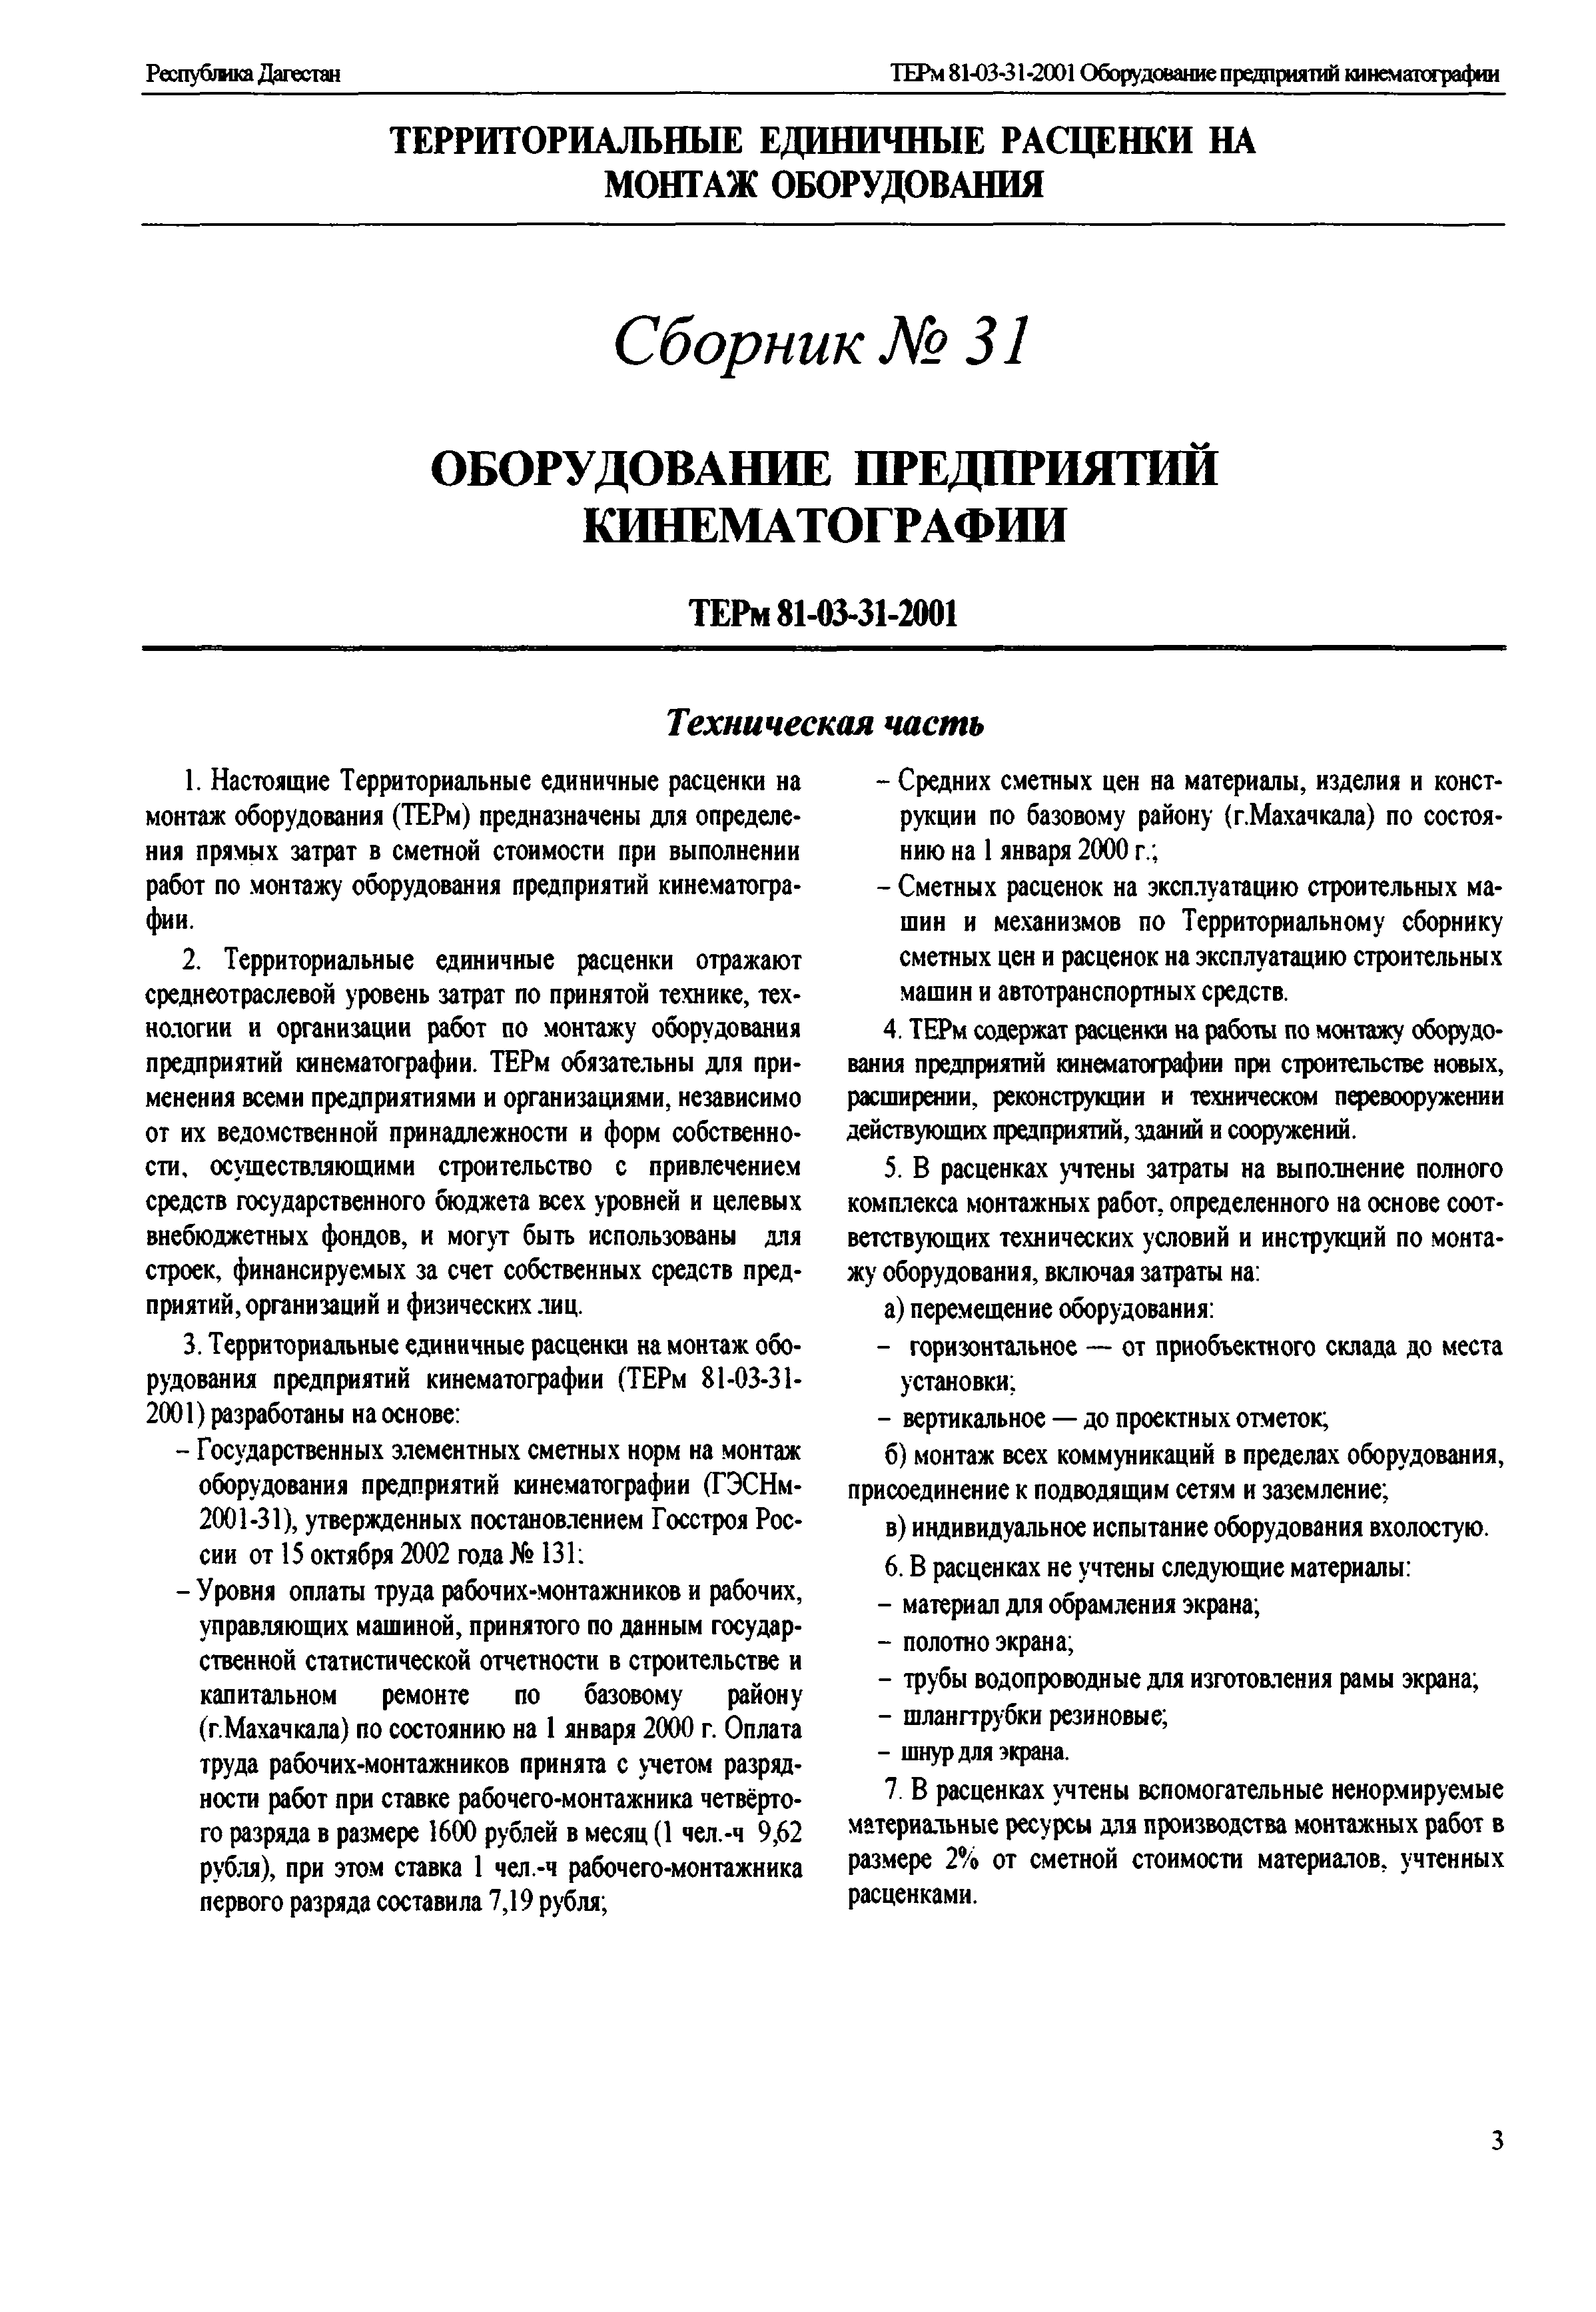 ТЕРм Республика Дагестан 2001-31